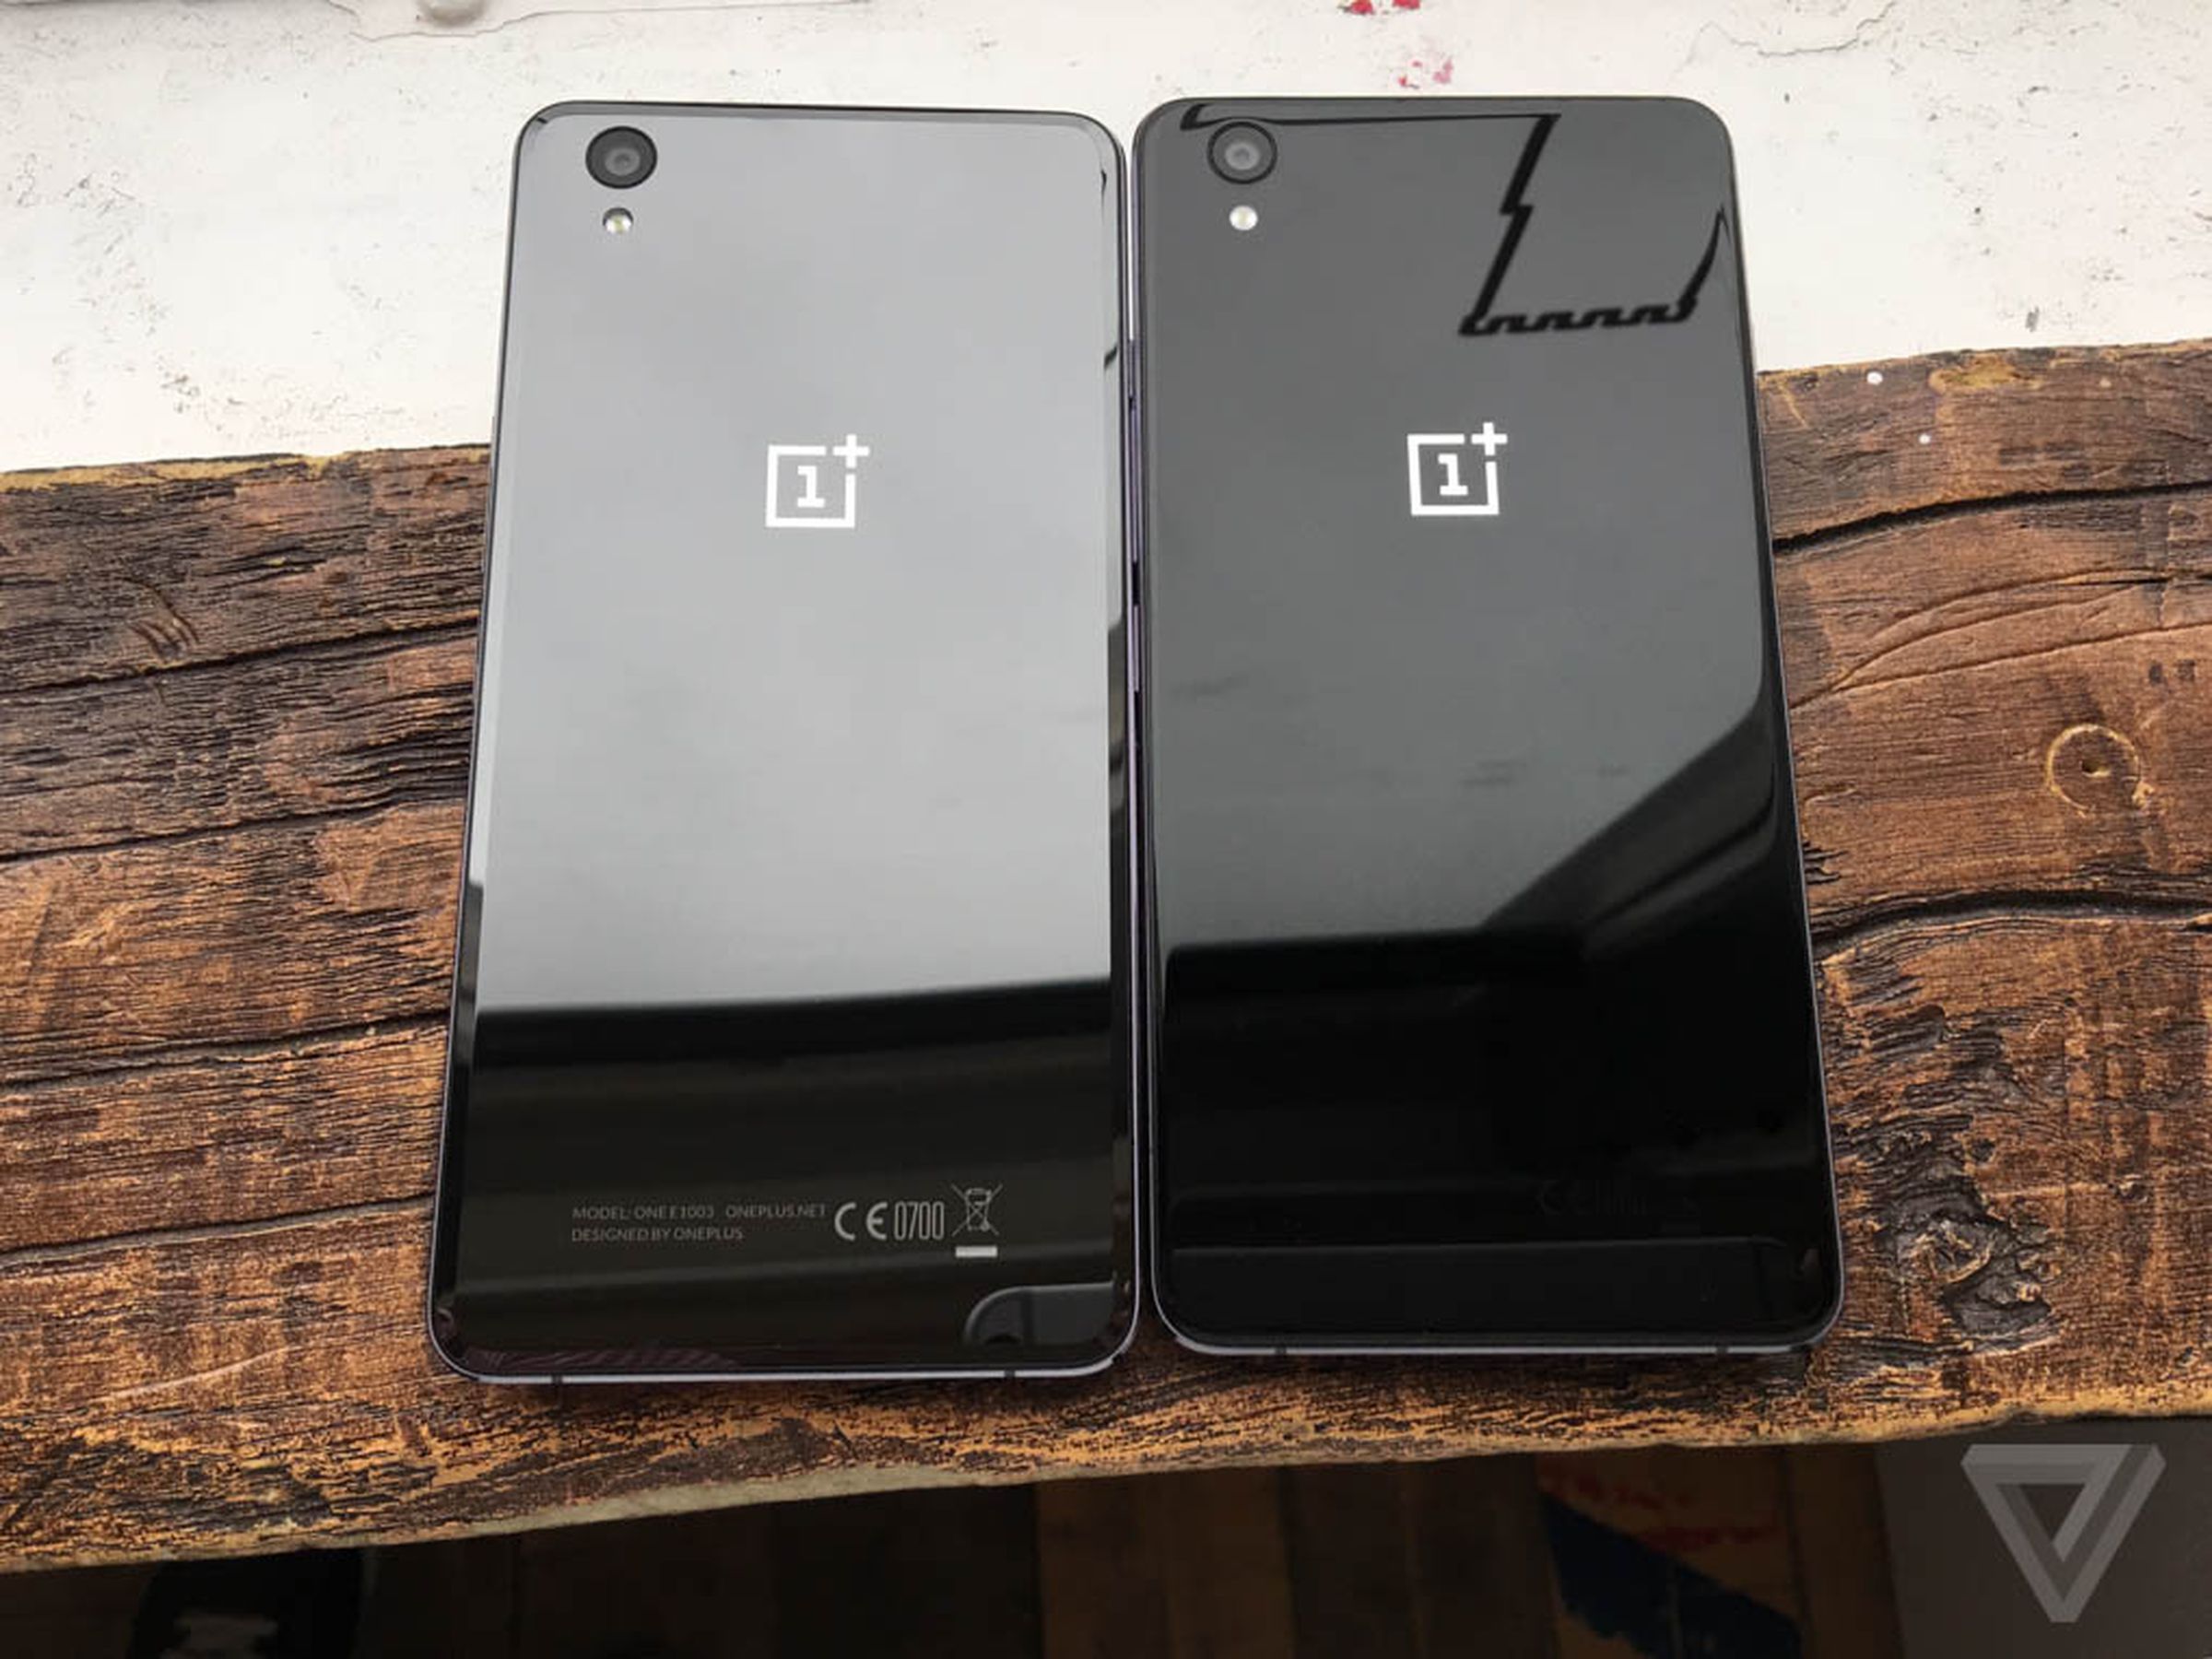 OnePlus X hands-on photos